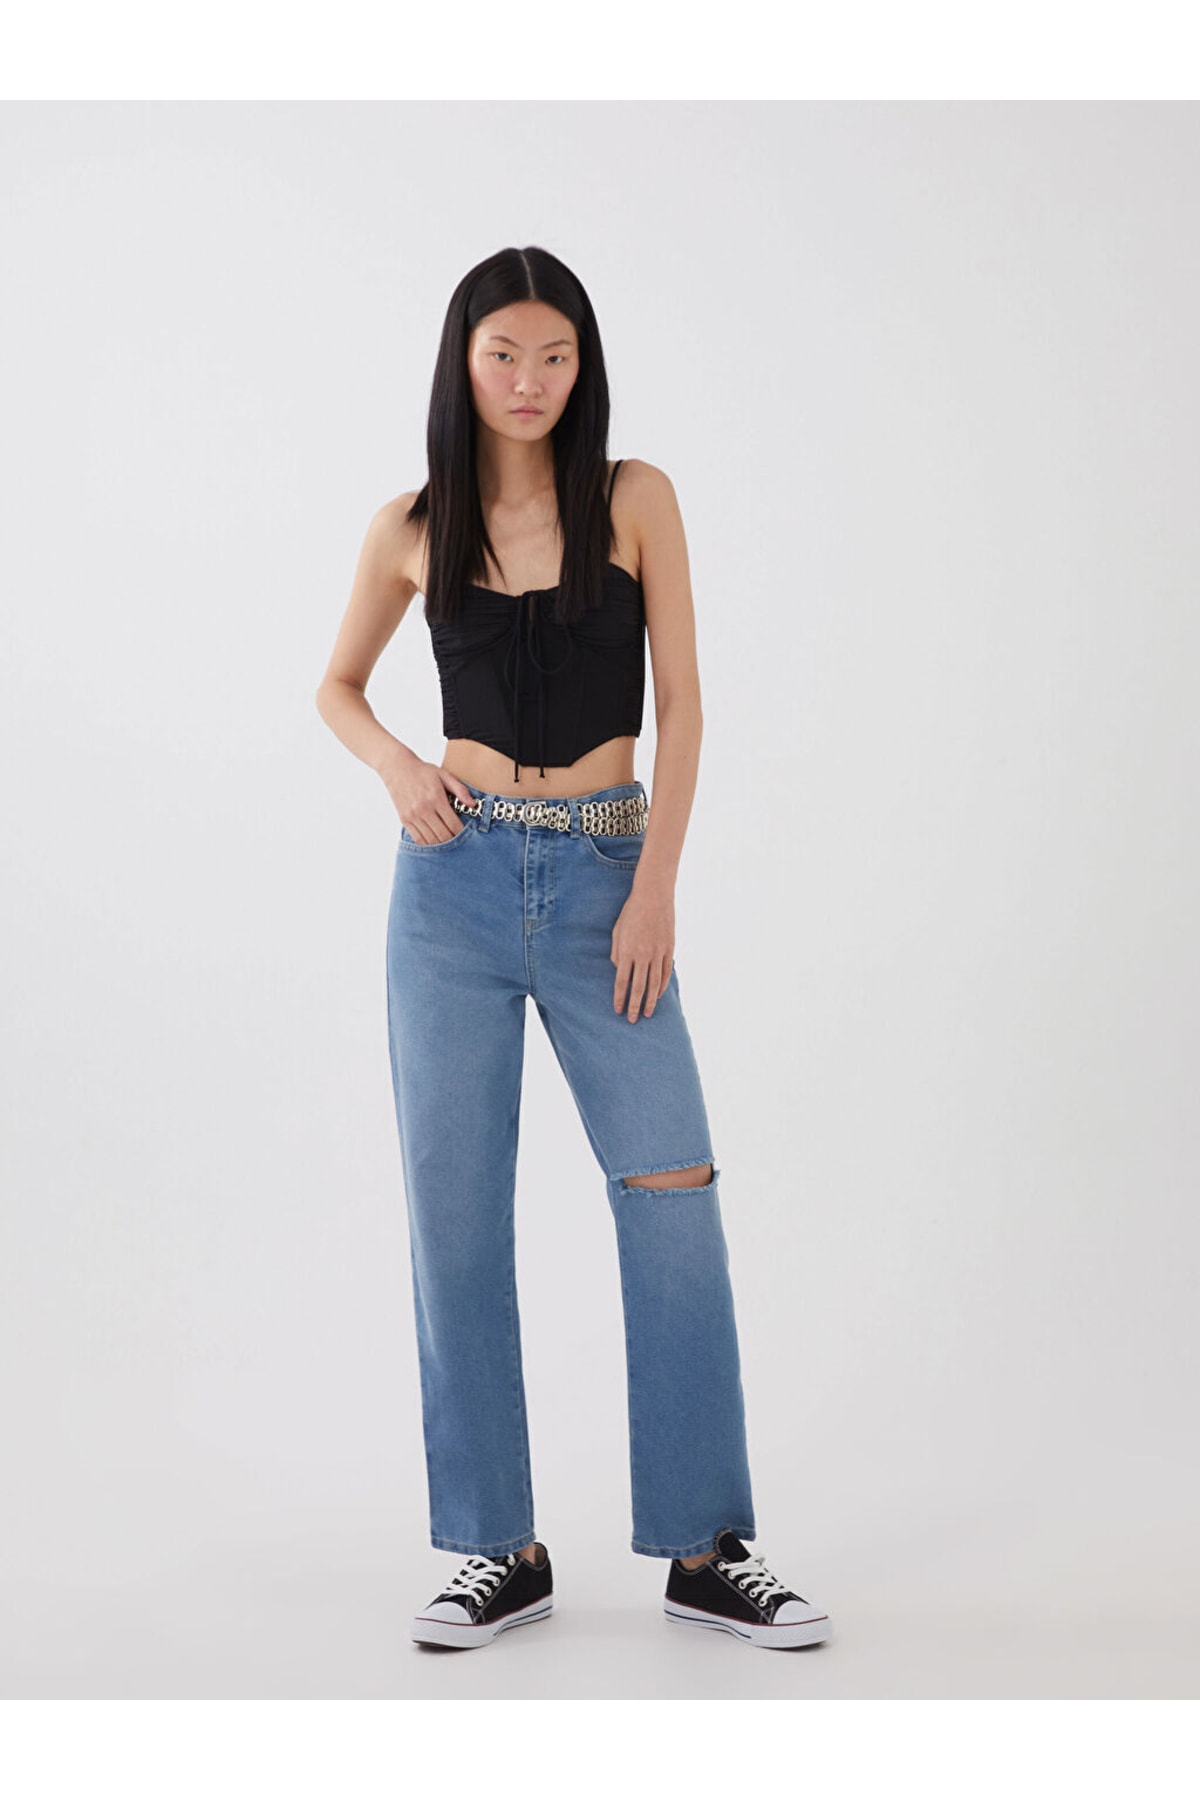 LC Waikiki High Waist Standard Fit Women's Jeans